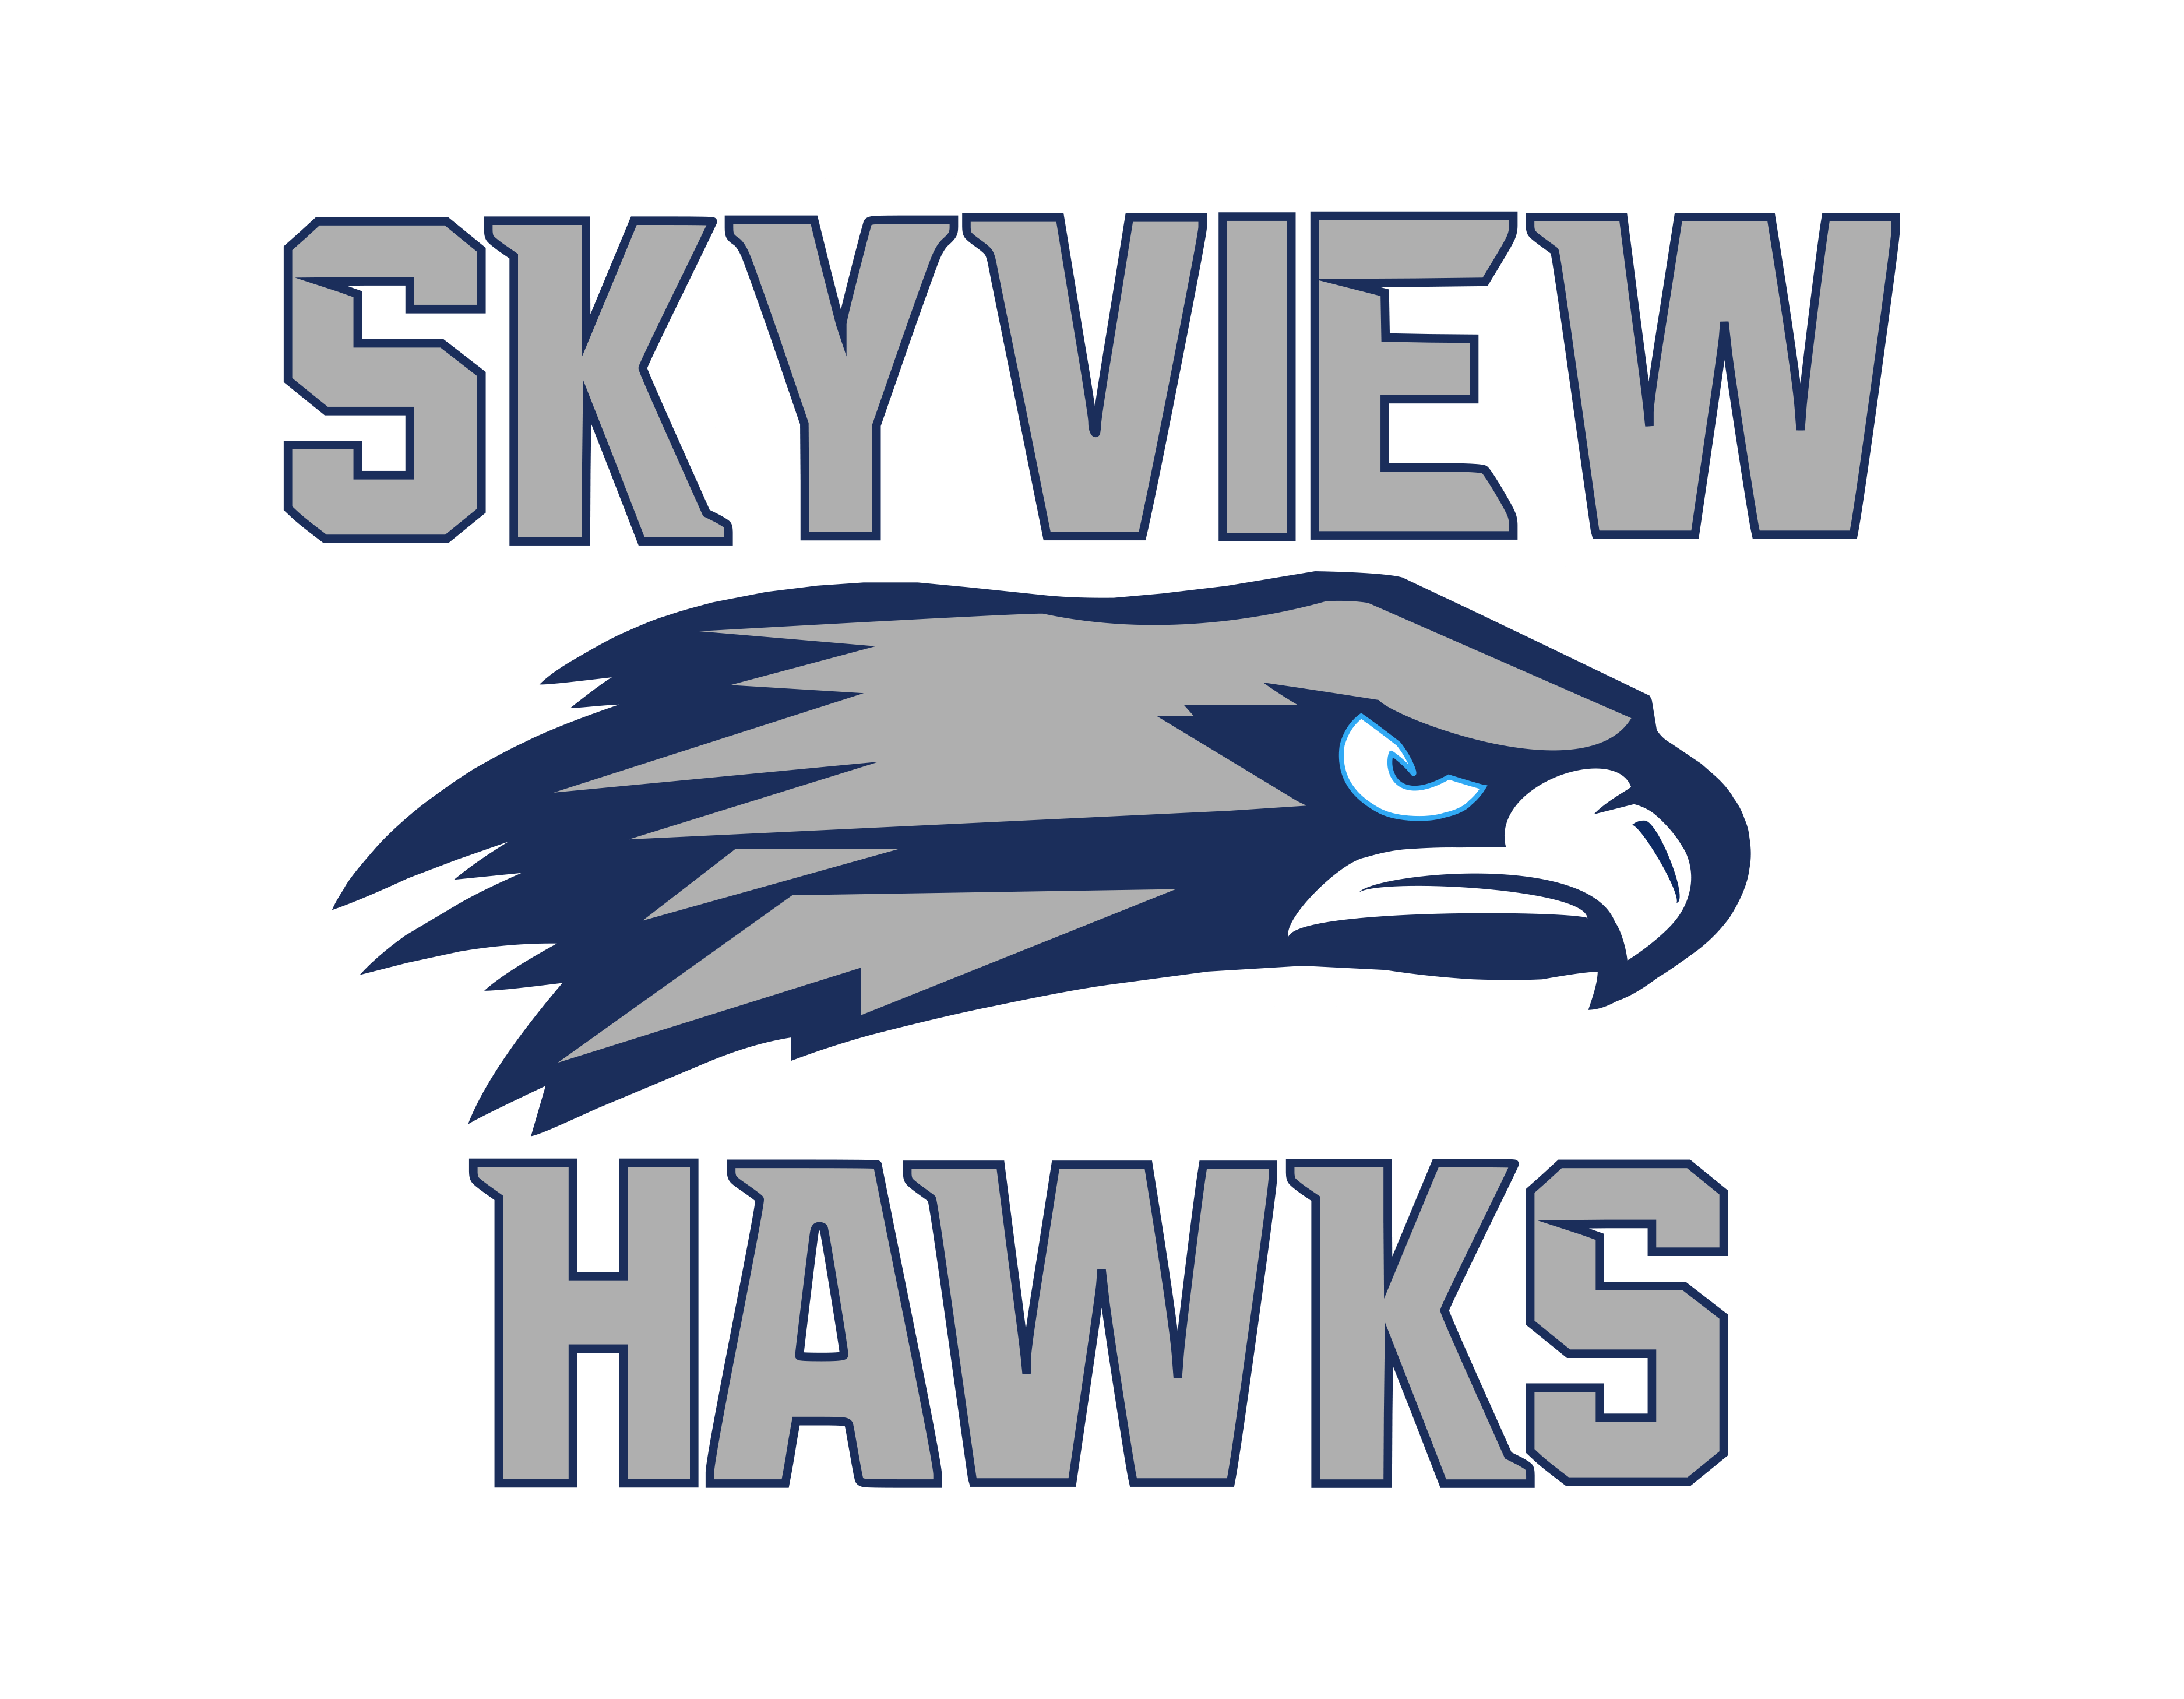 Softball Field and Hawks Logo - Skyview - Team Home Skyview Hawks Sports